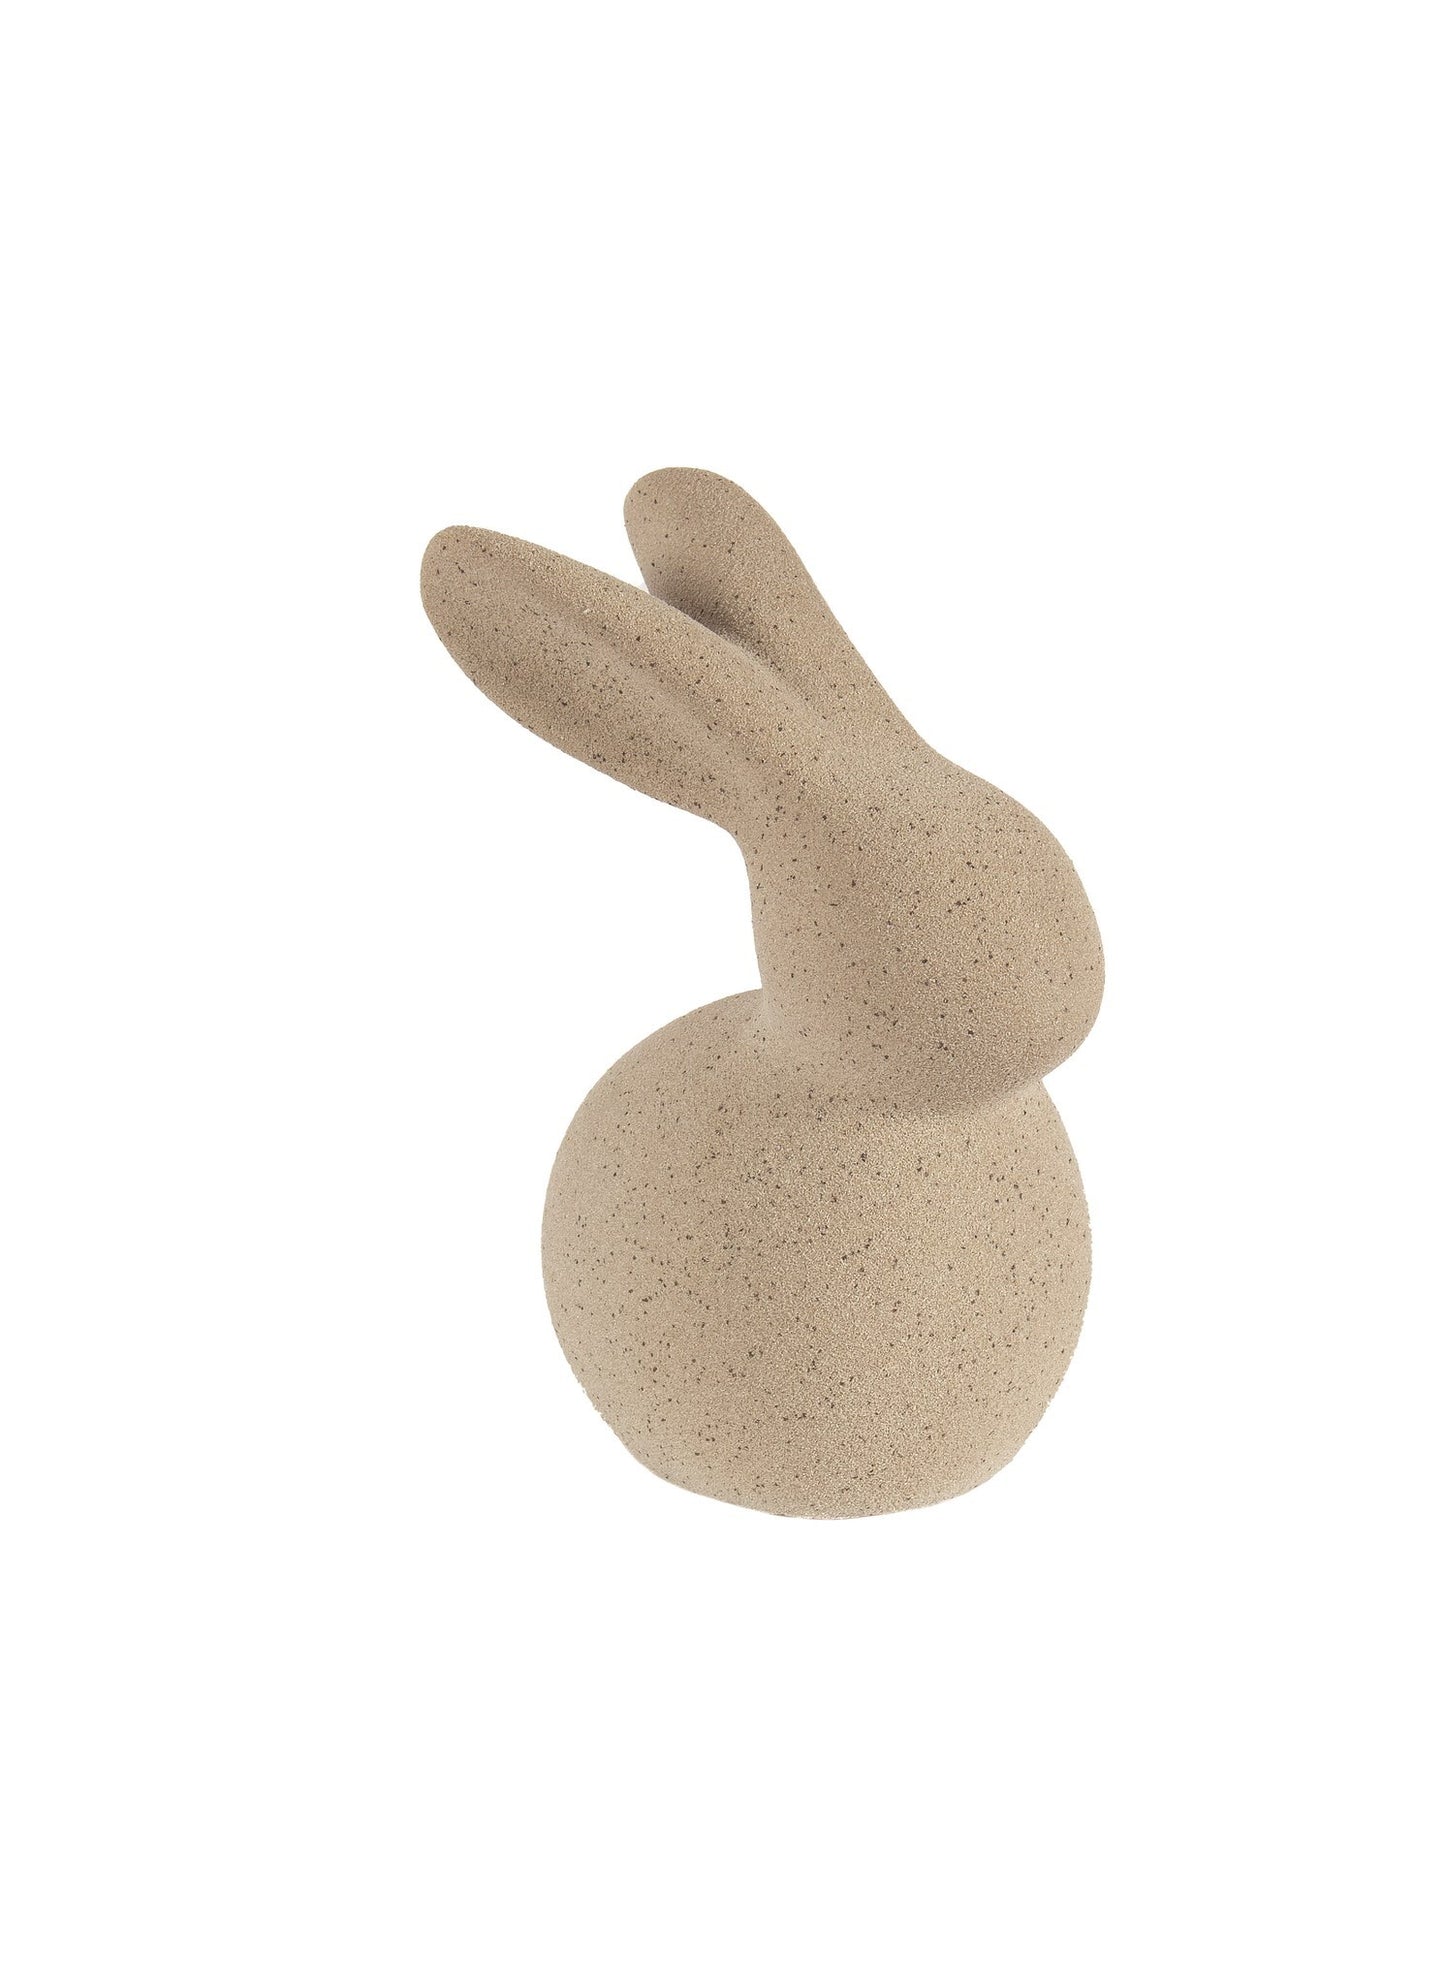 Bunny Grey Ceramic Small